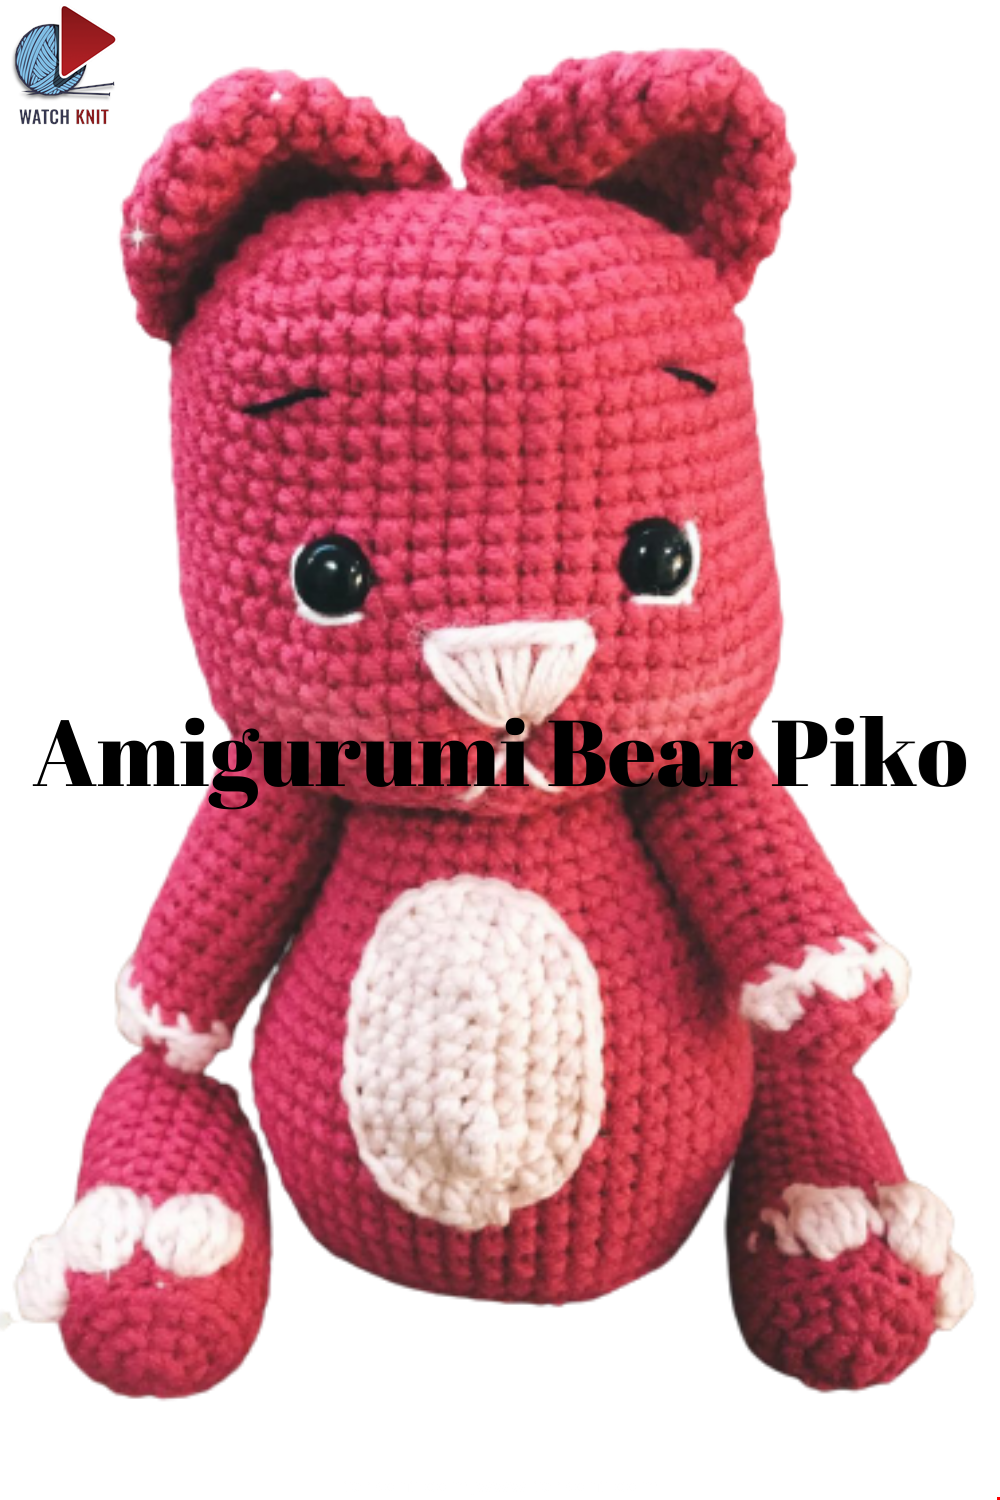 Amigurumi Bear Piko Recipe and Preparation